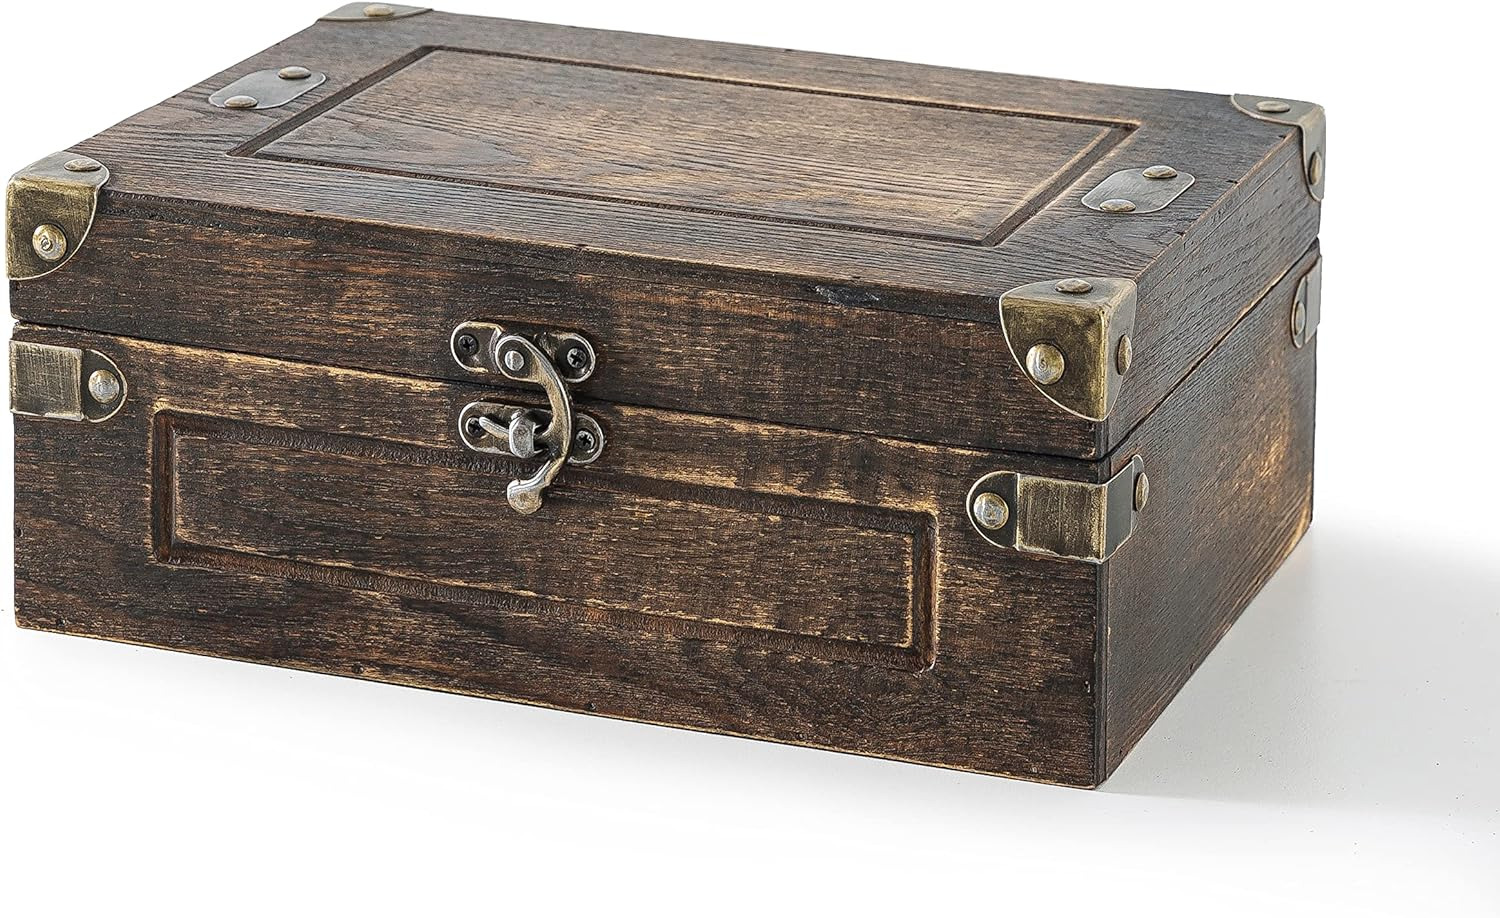 Sydney Decorative Wooden Treasure Chest: Timeless Masculine Fir Wood Box, Vintag